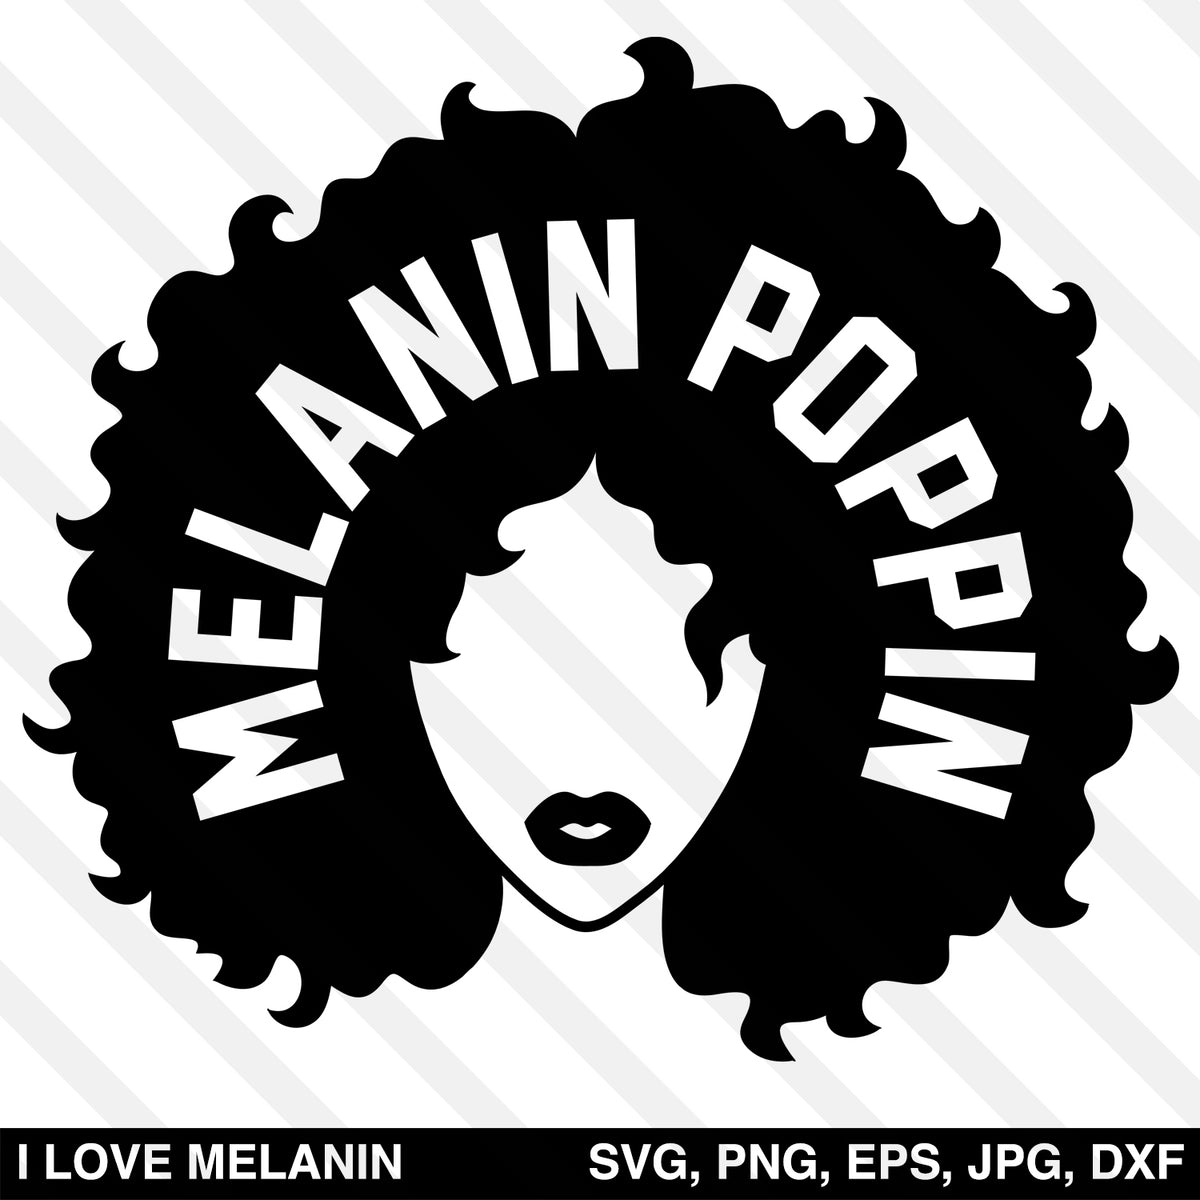 Download Melanin Poppin SVG - I Love Melanin